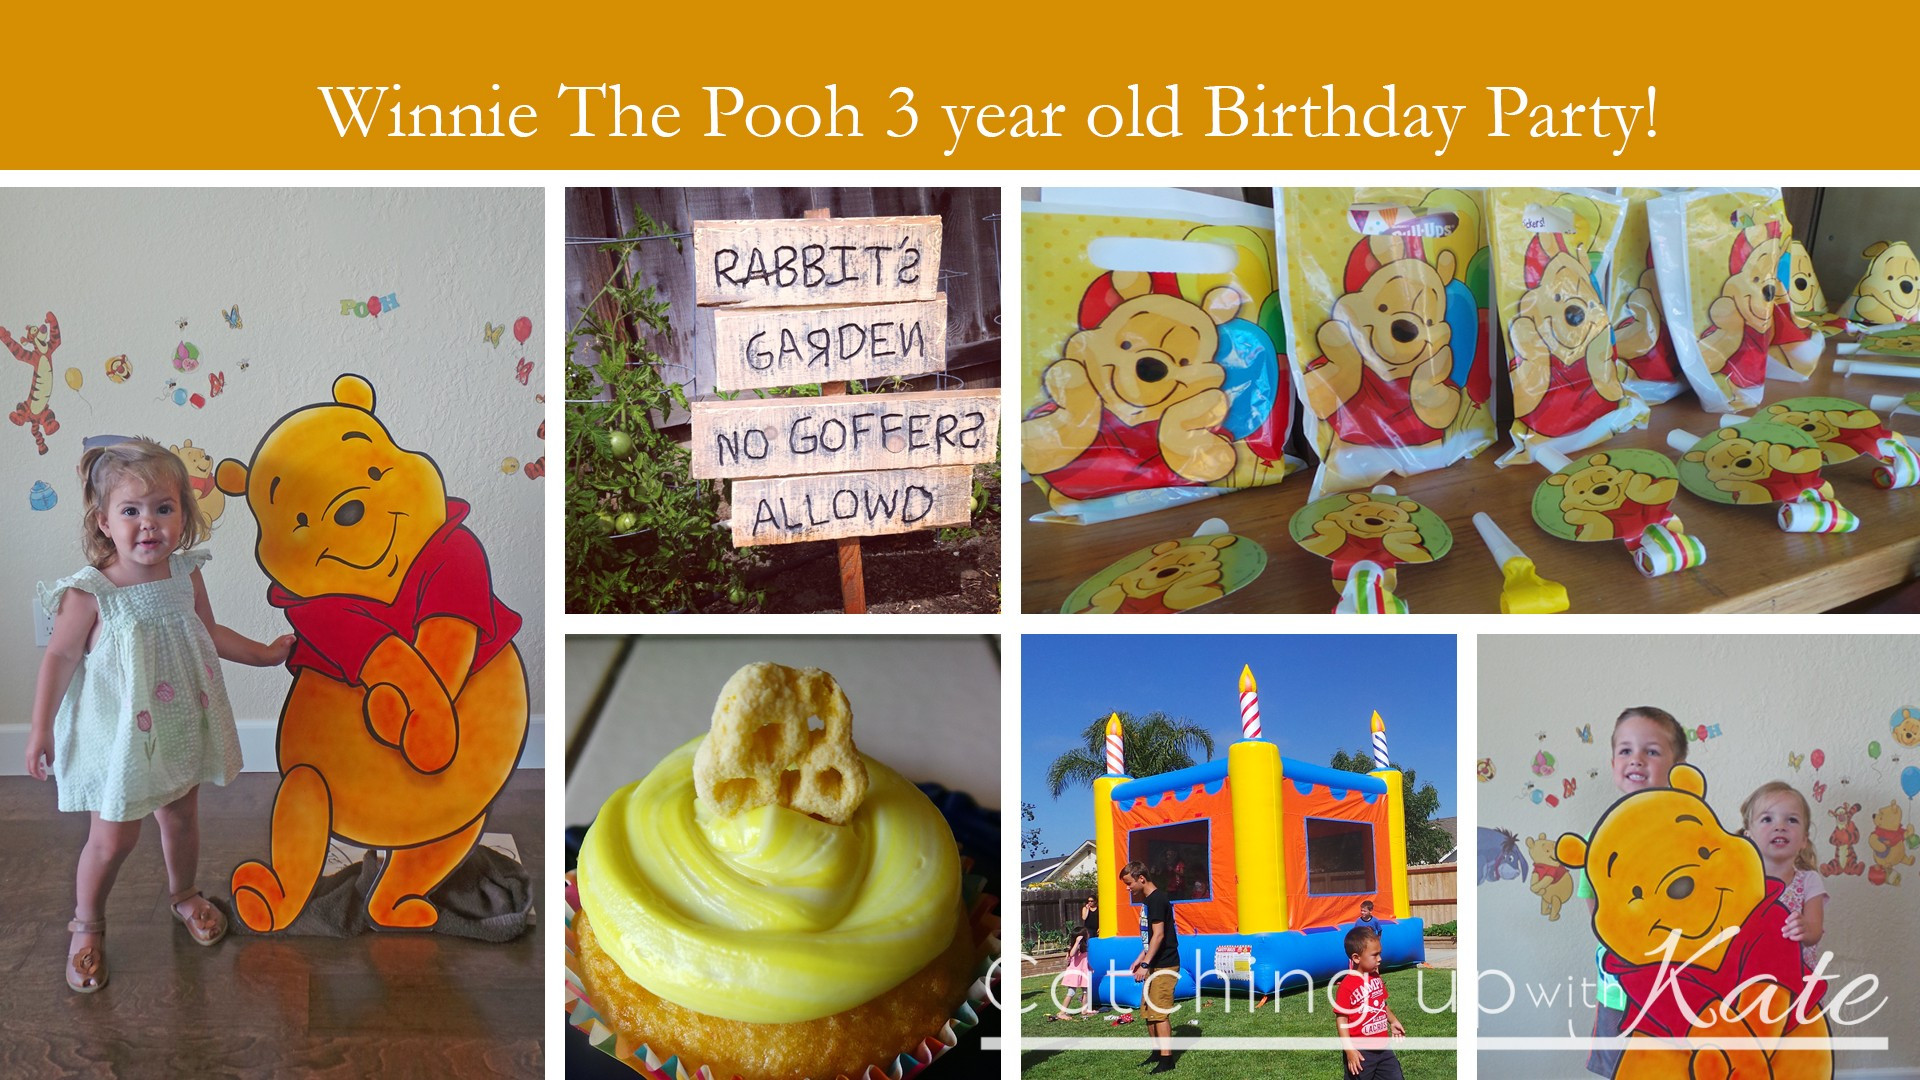 Best ideas about Winnie The Pooh Birthday Decorations
. Save or Pin Winnie the Pooh Birthday Party Now.